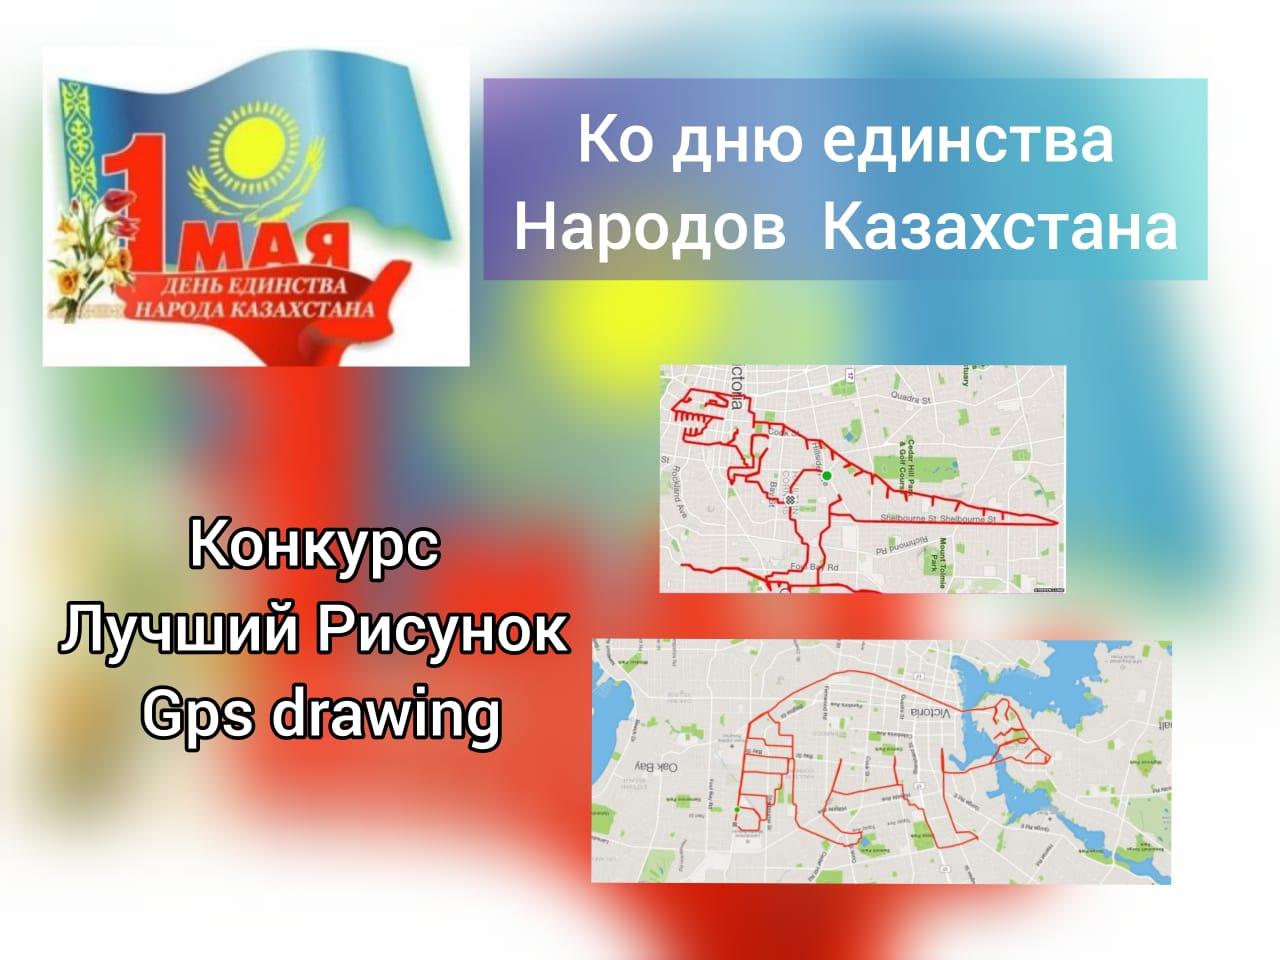 Конкурс на лучший рисунок "GPS drawing"